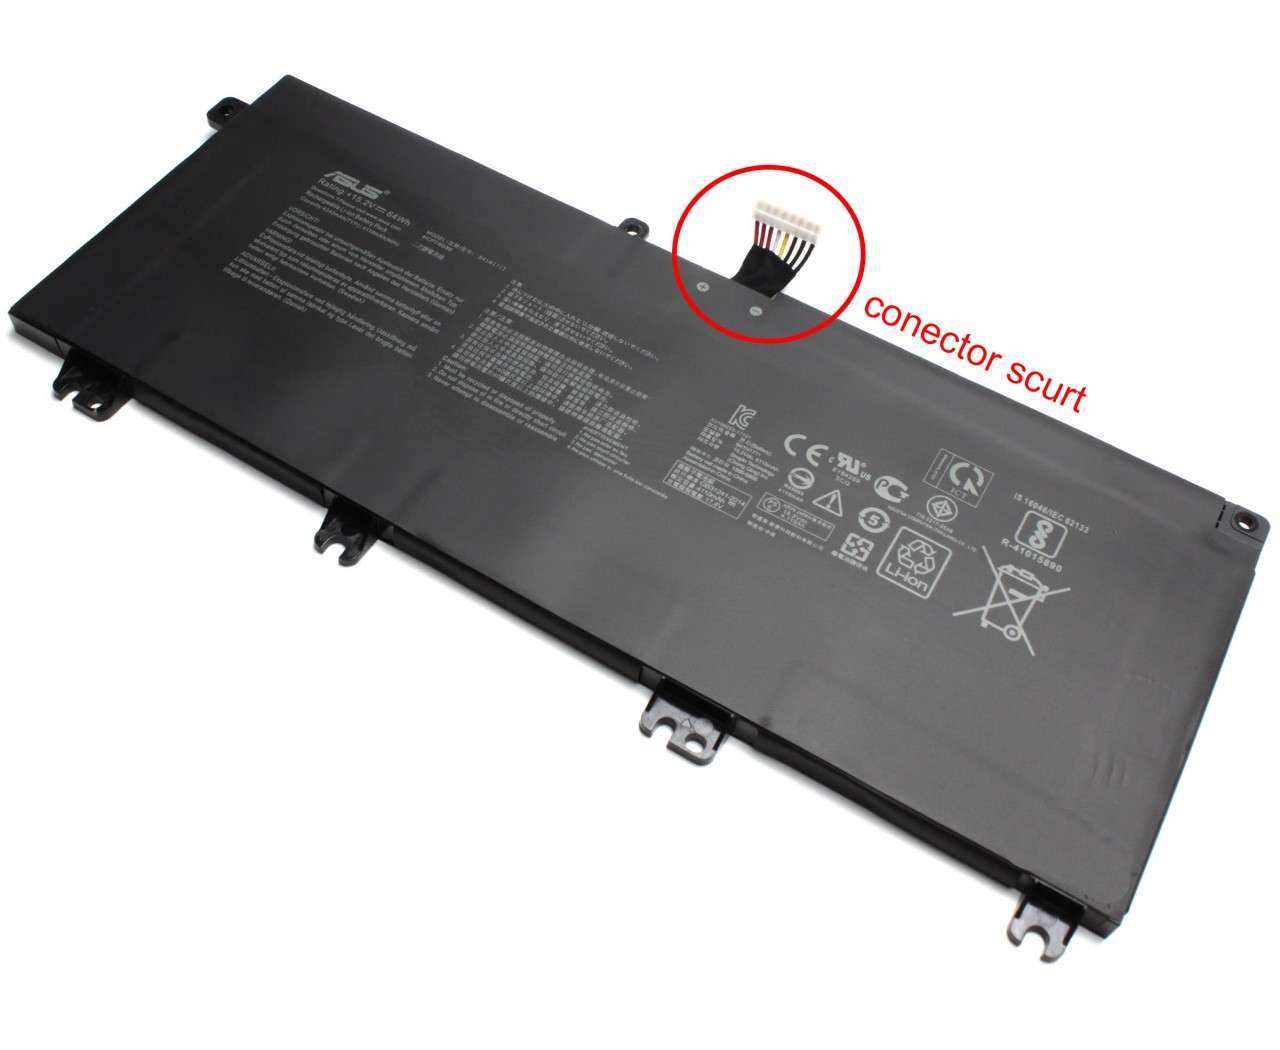 Baterie Asus GL503VD Originala 64Wh conector scurt